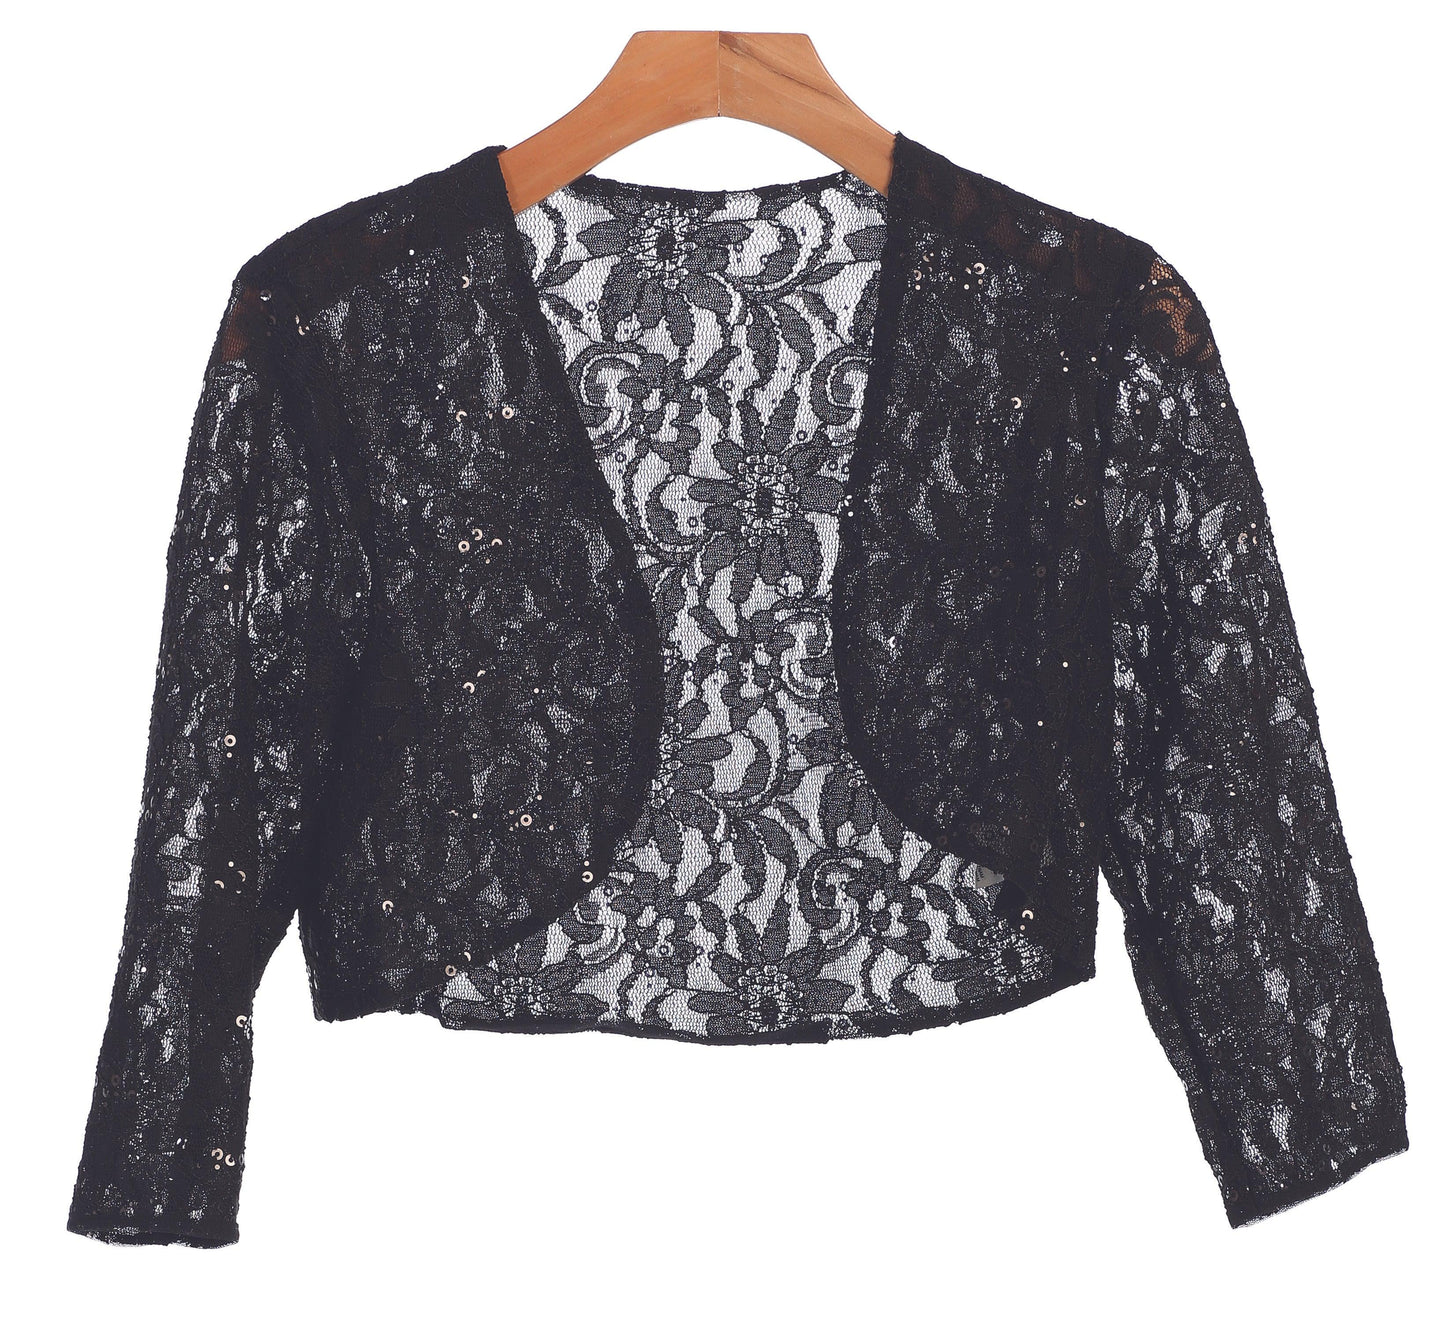 Formal Evening Lace Bolero Jacket Sale - The Dress Outlet